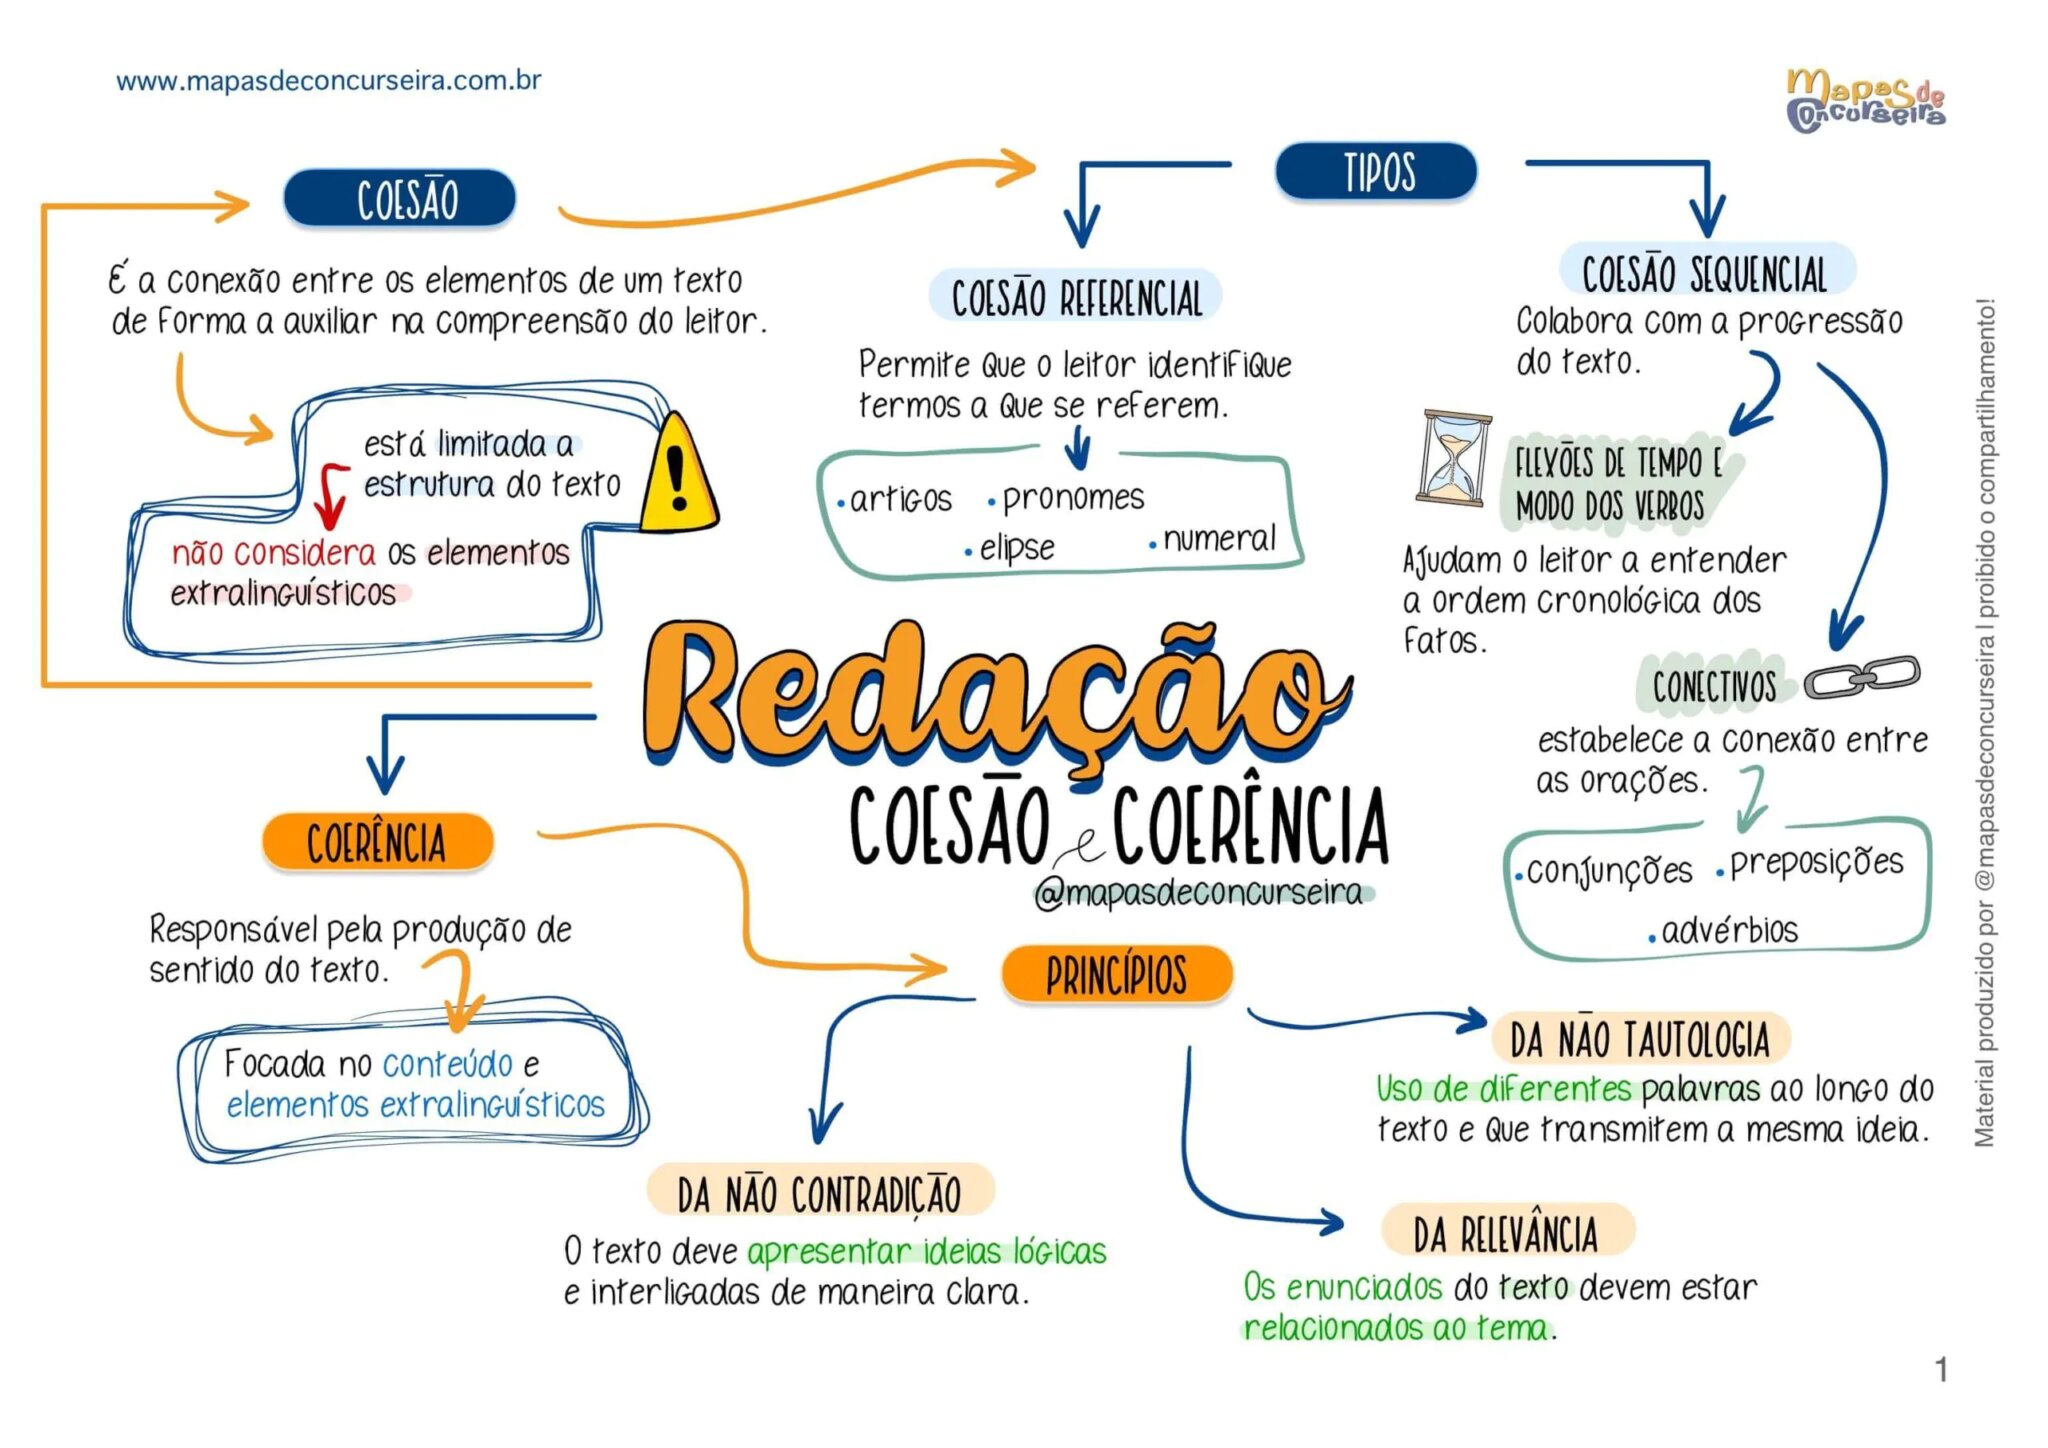 REDACAO-AMOSTRA-scaled.jpg